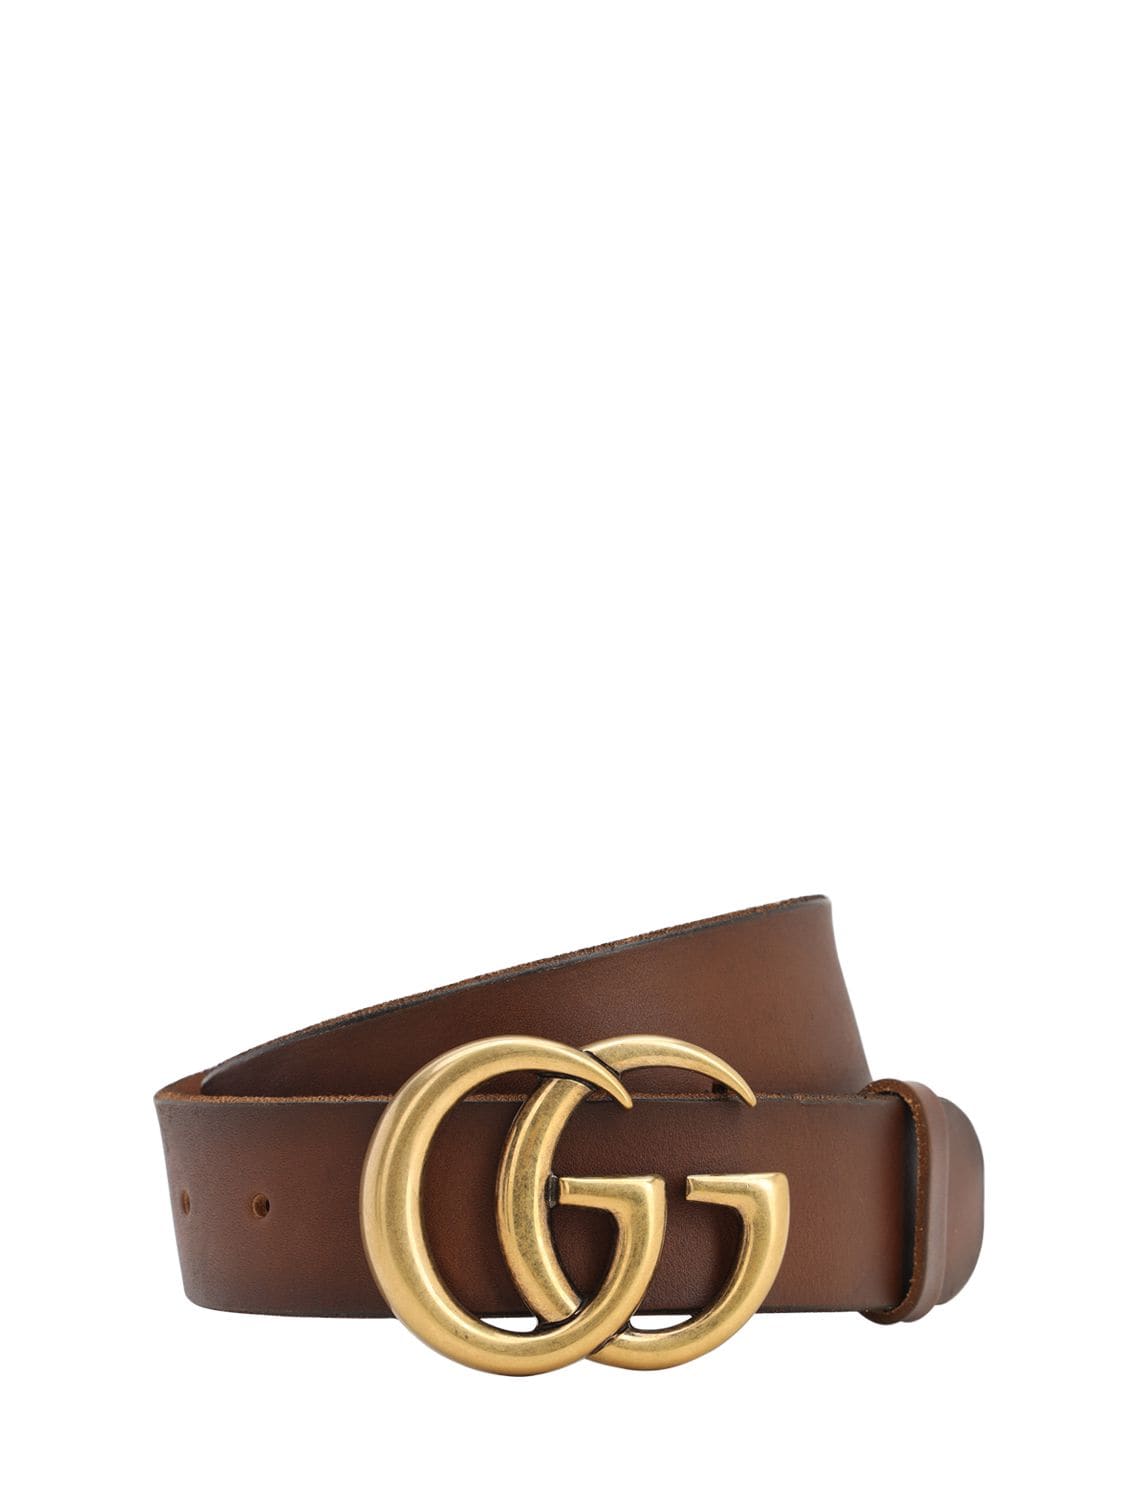 4cm Gg Leather Belt